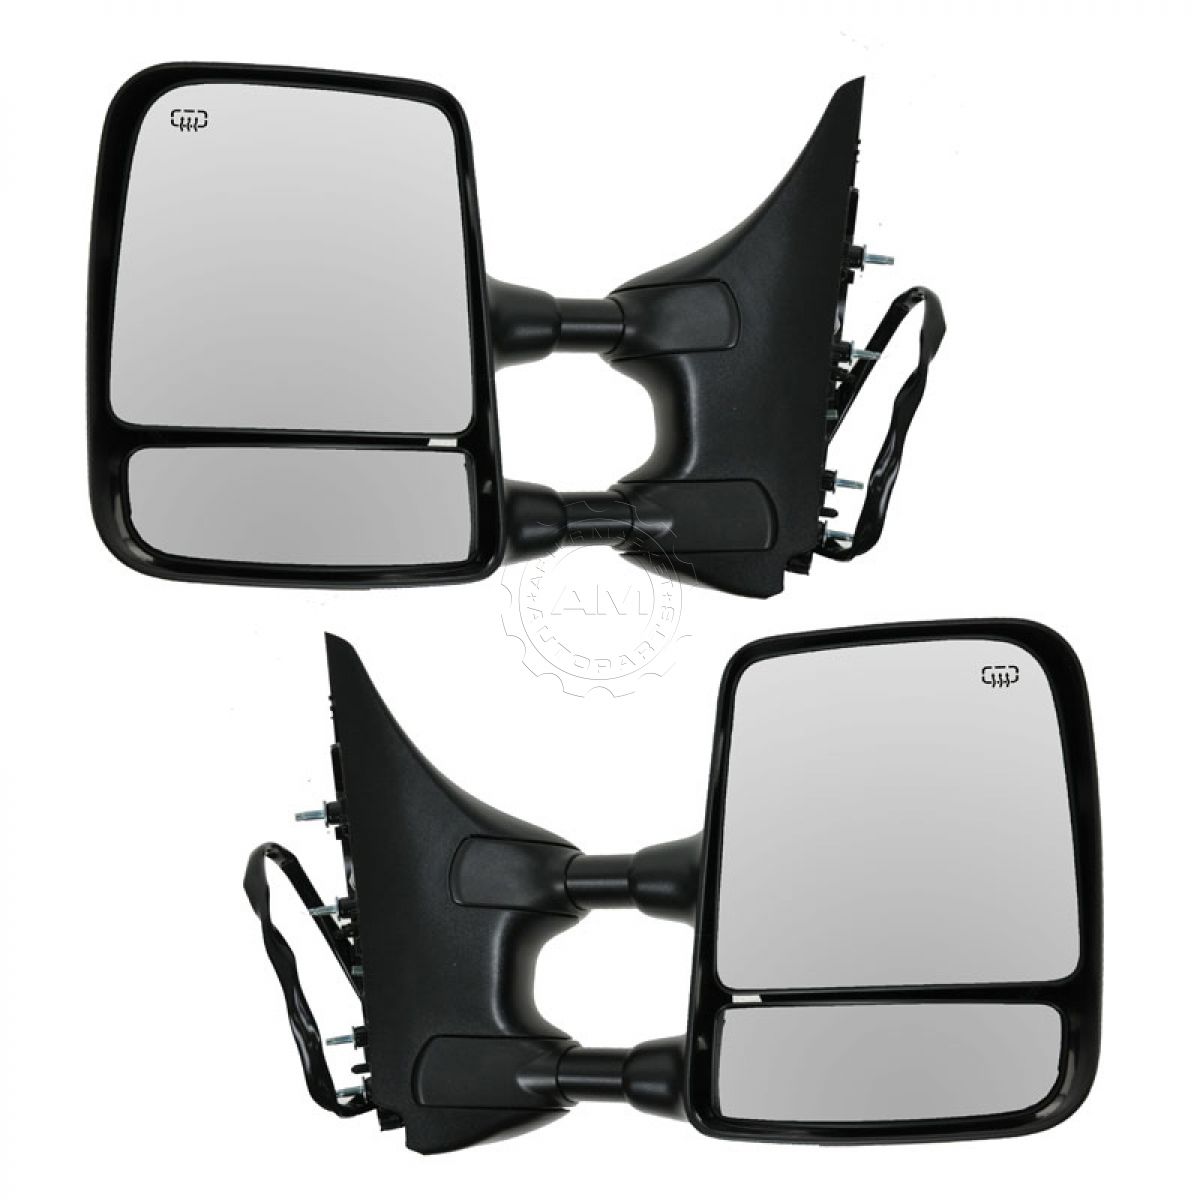 Nissan titan side view mirrors #2